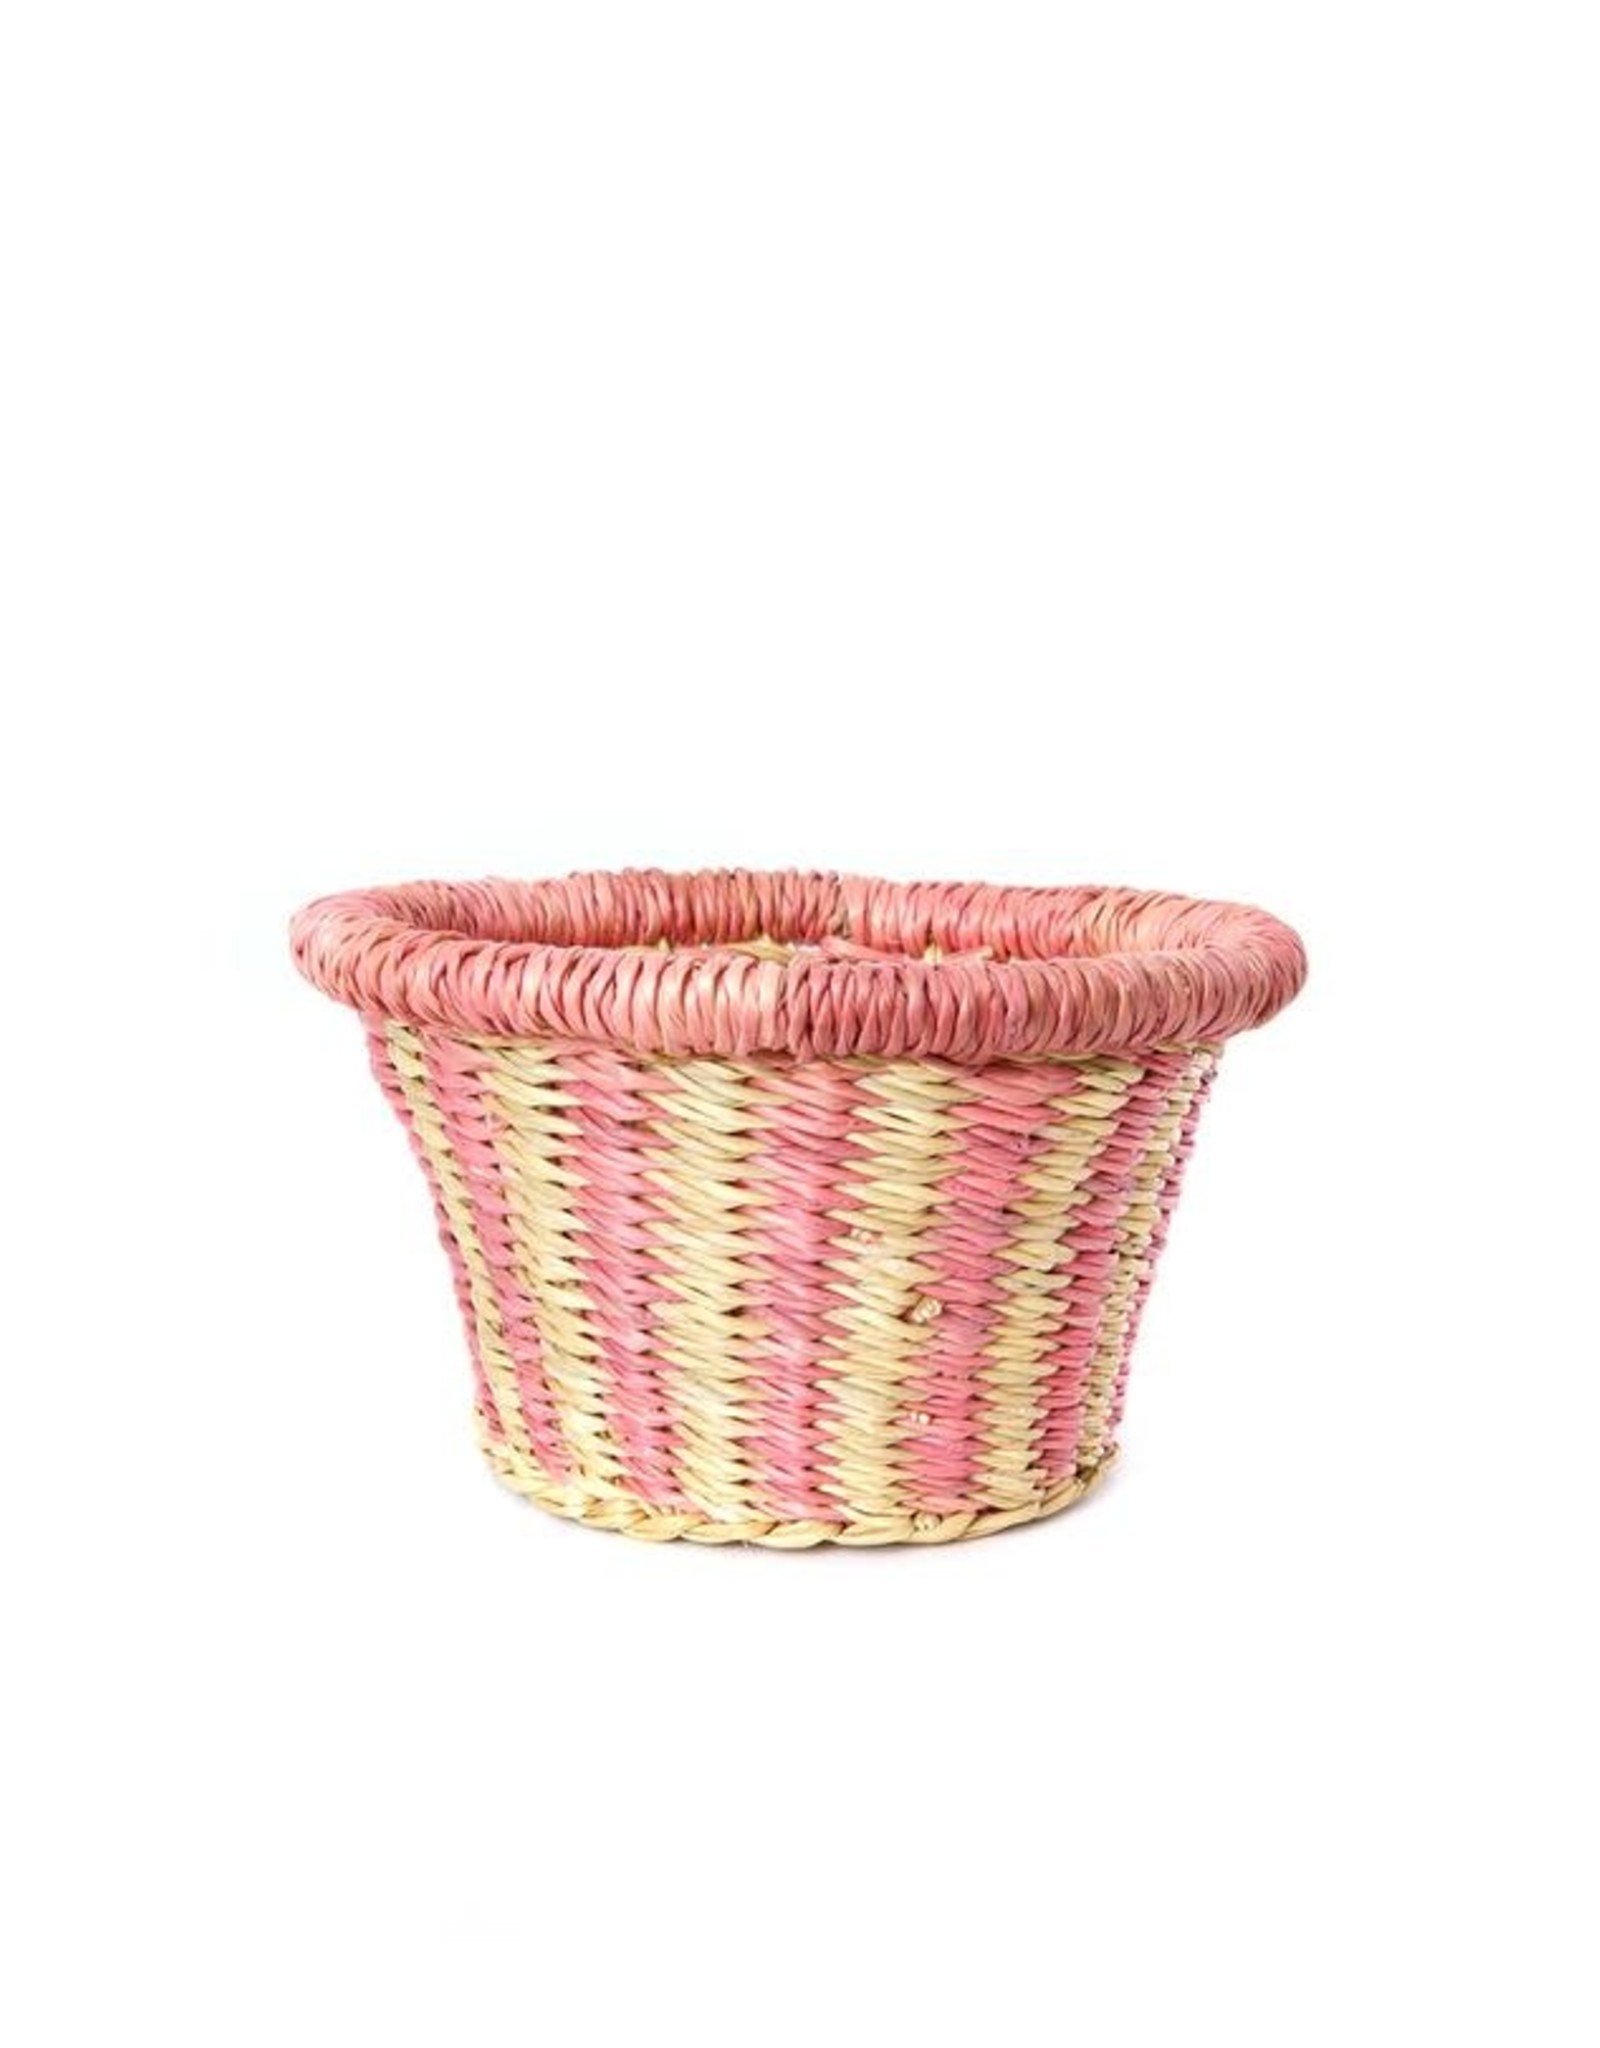 Ghana Little Cupcake Baskets, Ghana